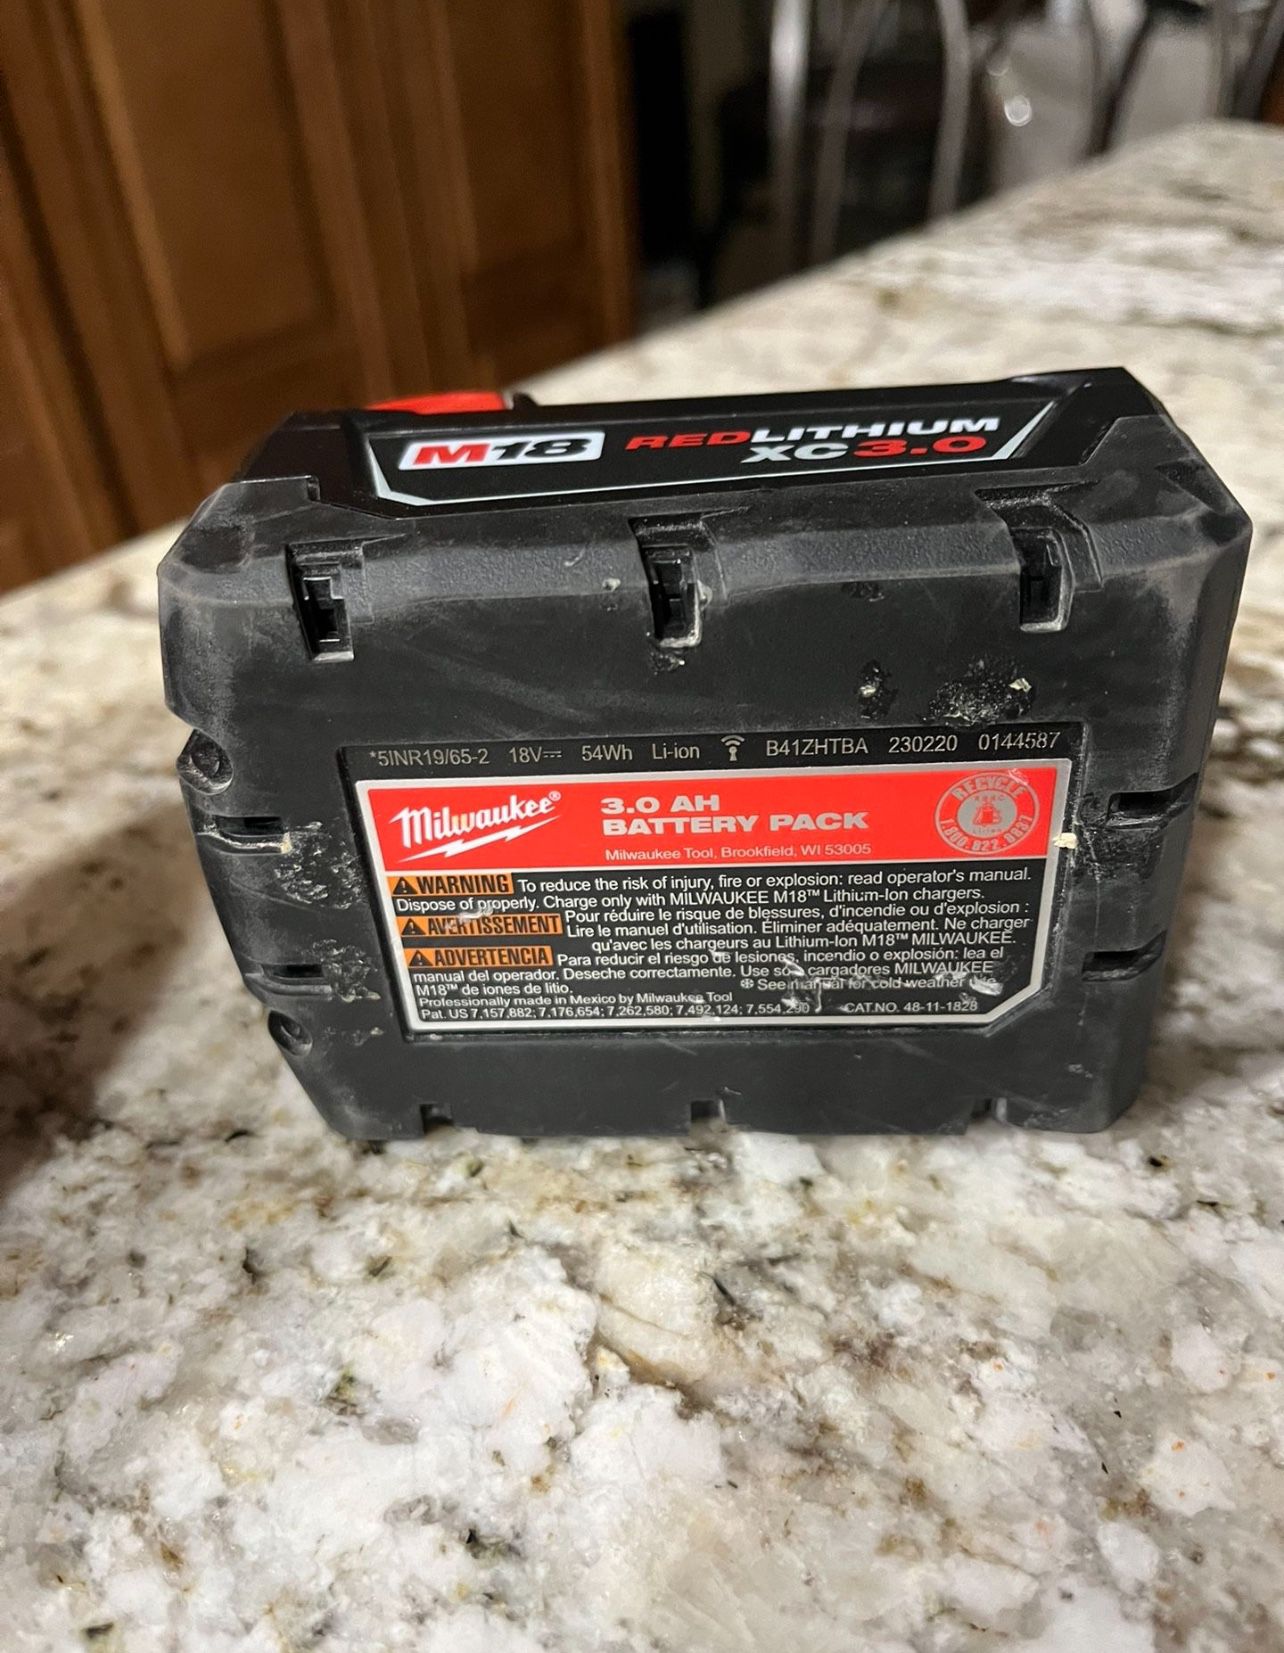 Power Drill Battery